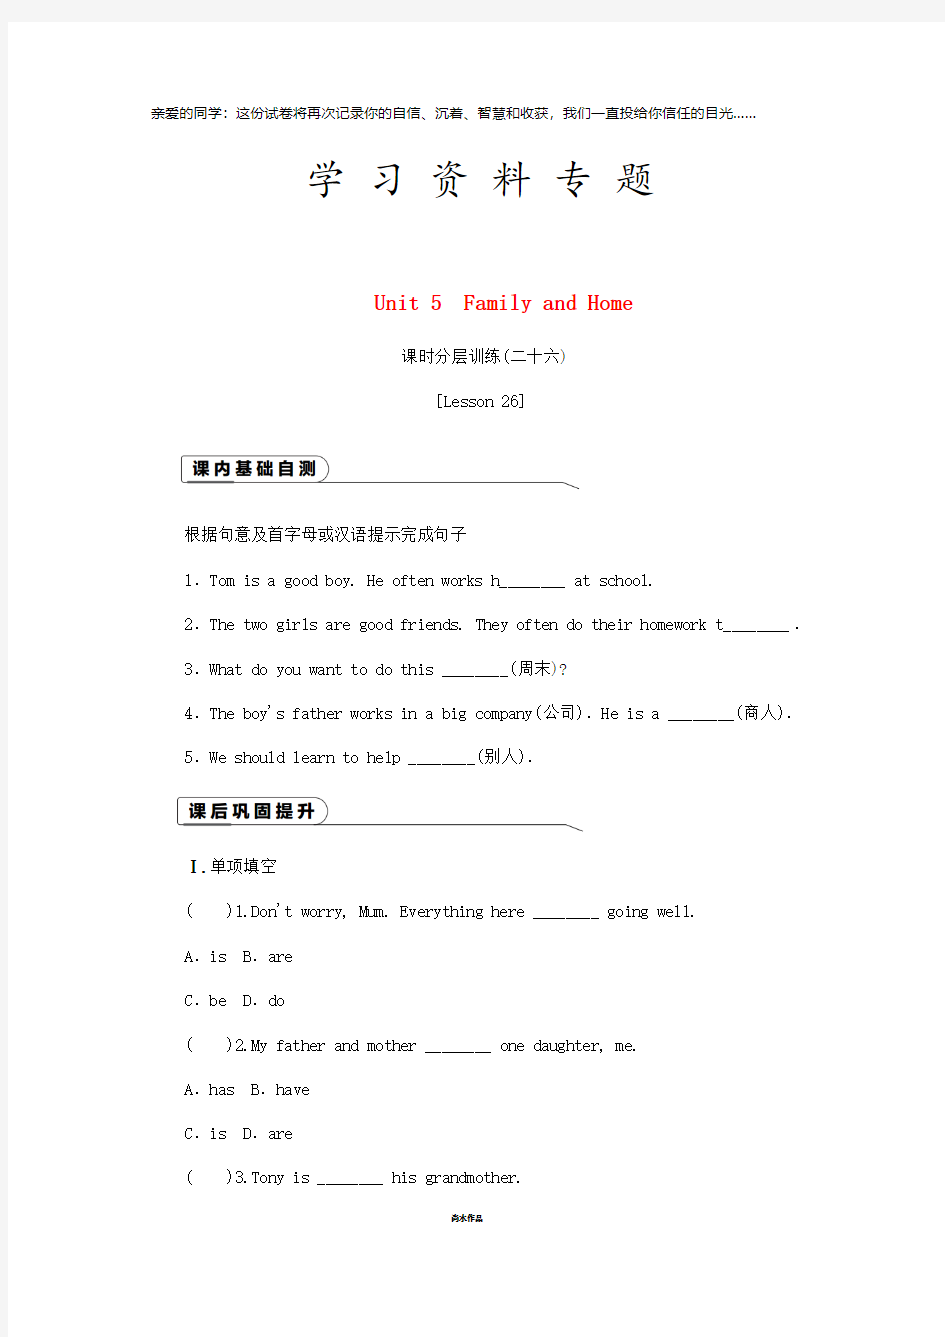 七年级英语上册 Unit 5 Family and Home Lesson 26 Li Ming’s Family课时分层训练